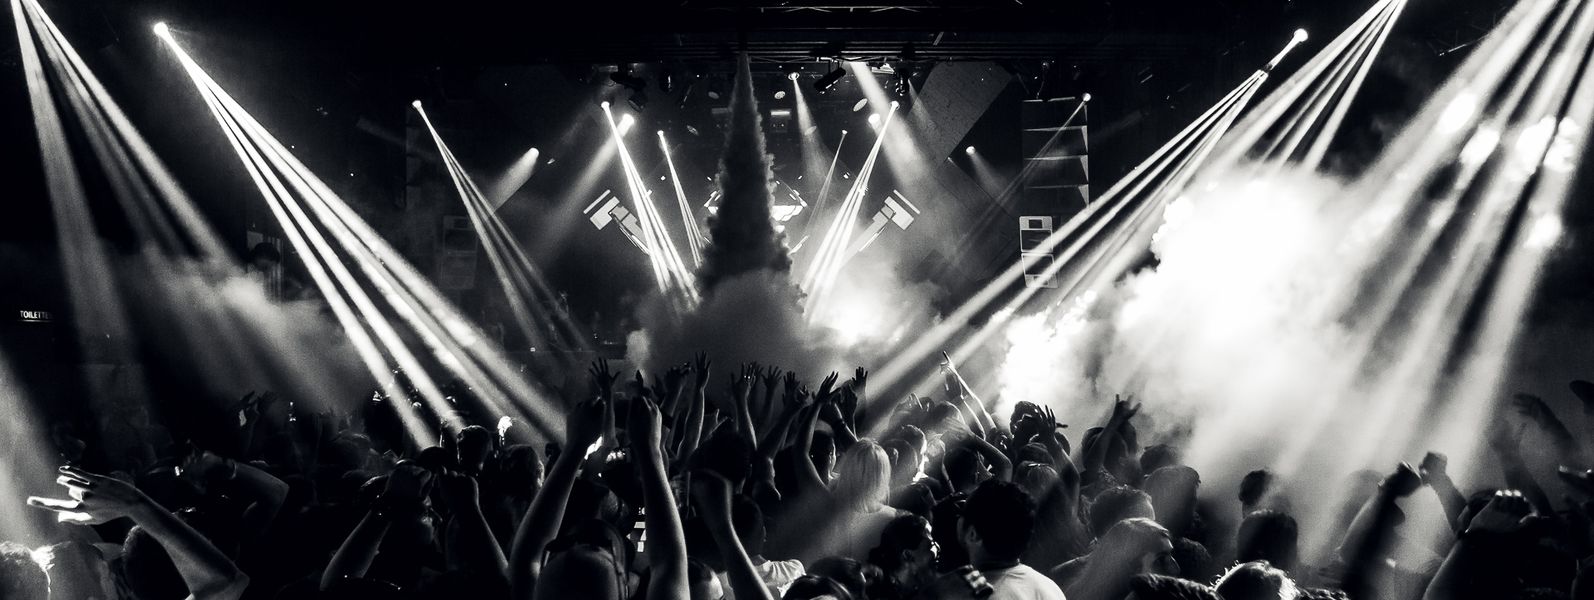 Space Ibiza's Shows | Mixcloud